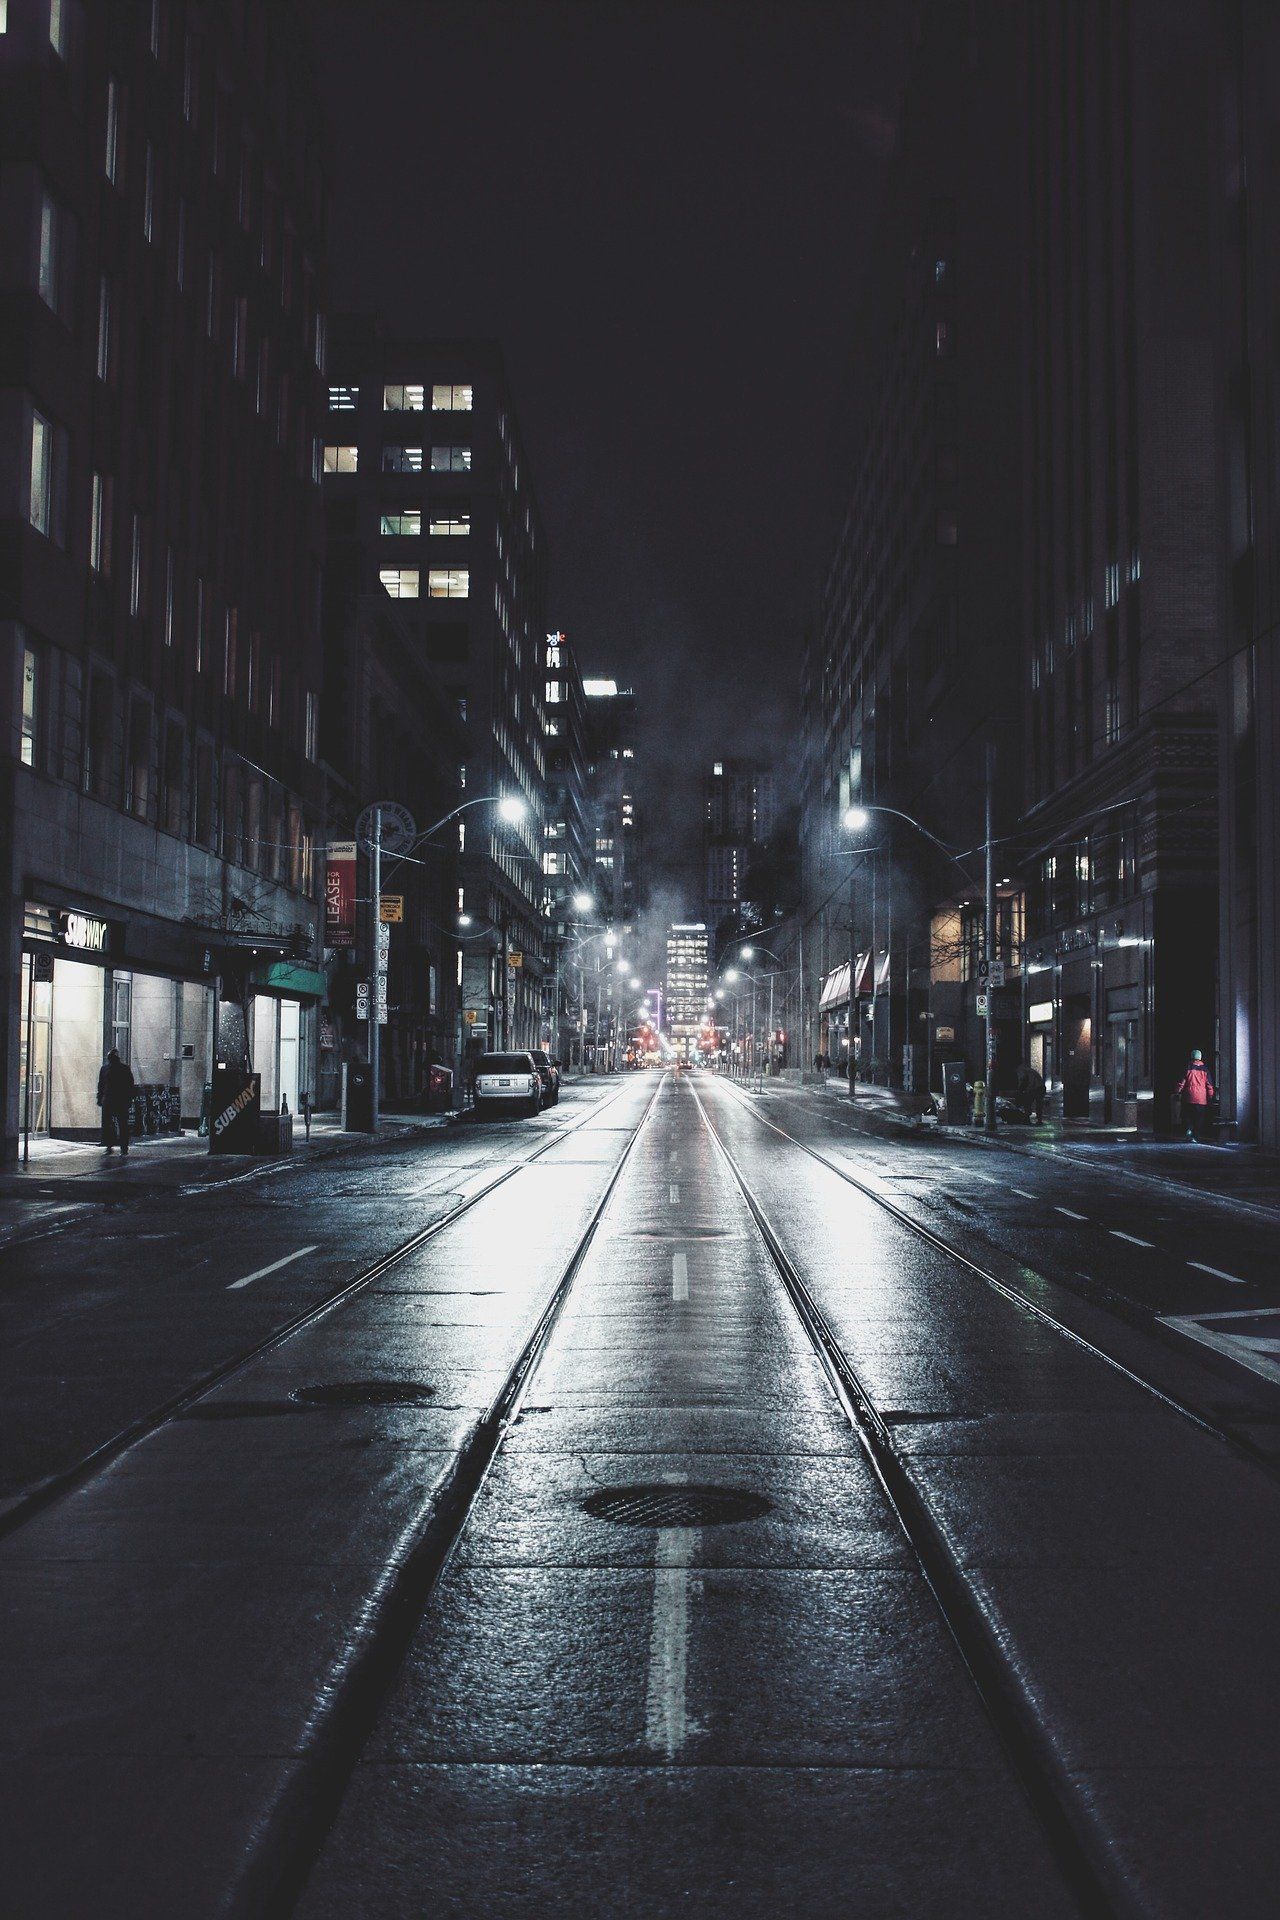 A dark street at night with street lights illuminating the road - Dark